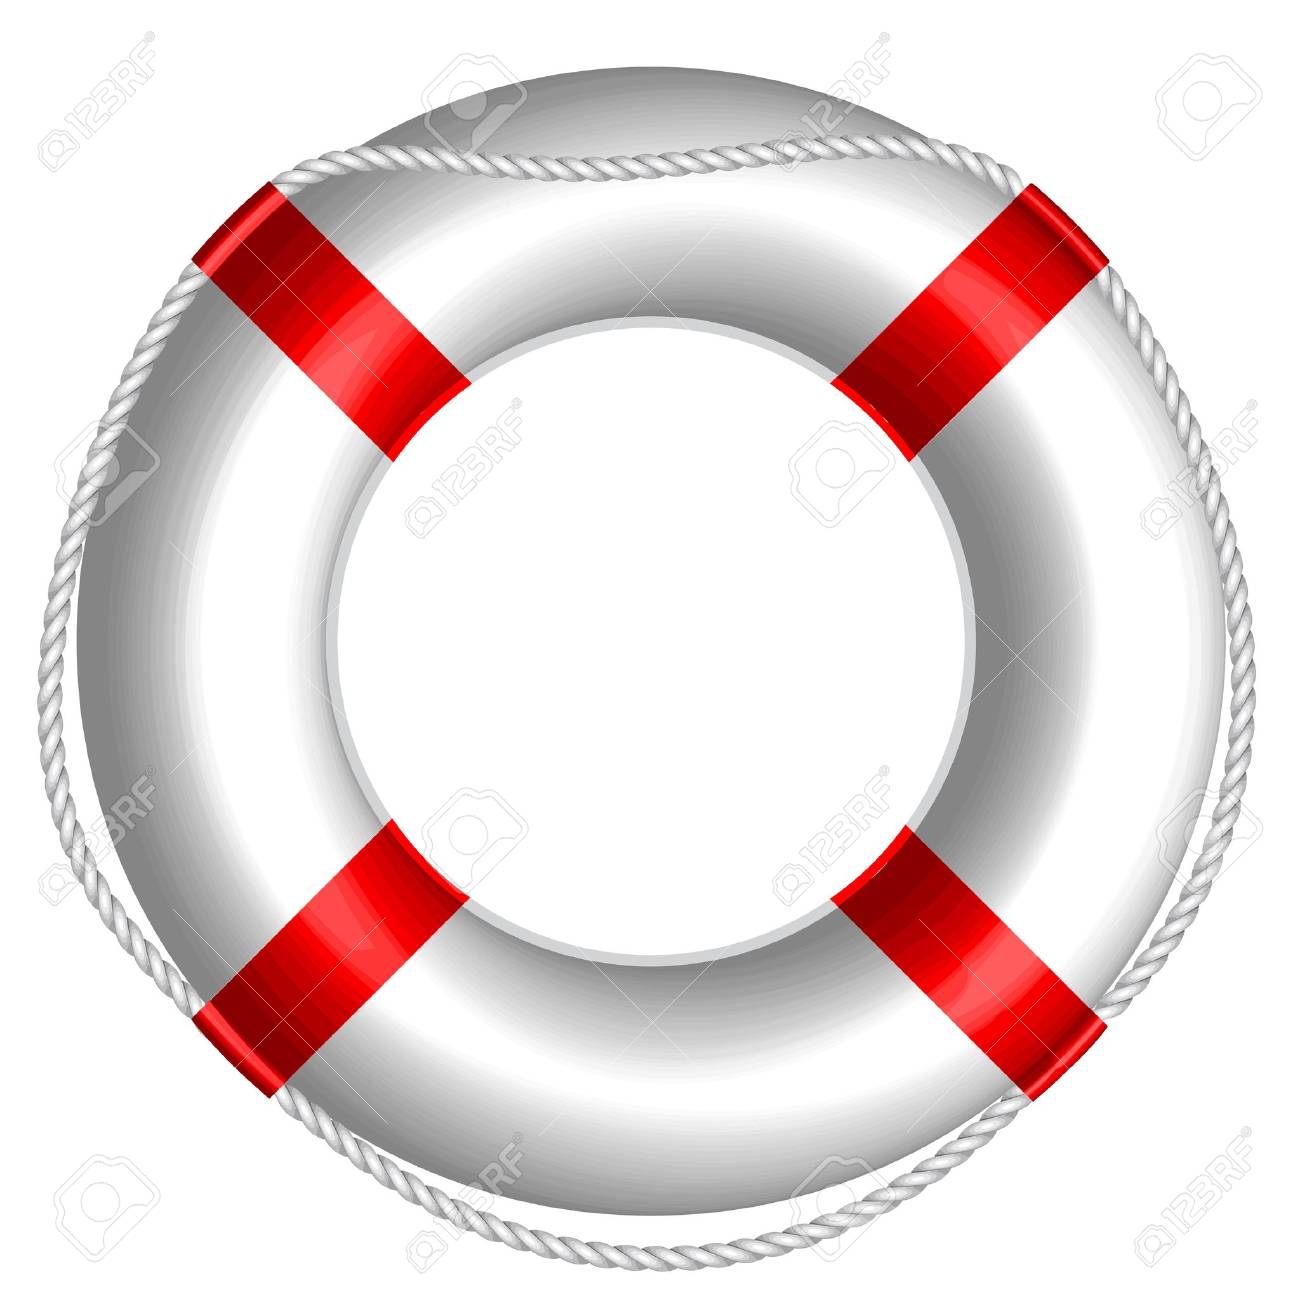 lifeguard clipart floater